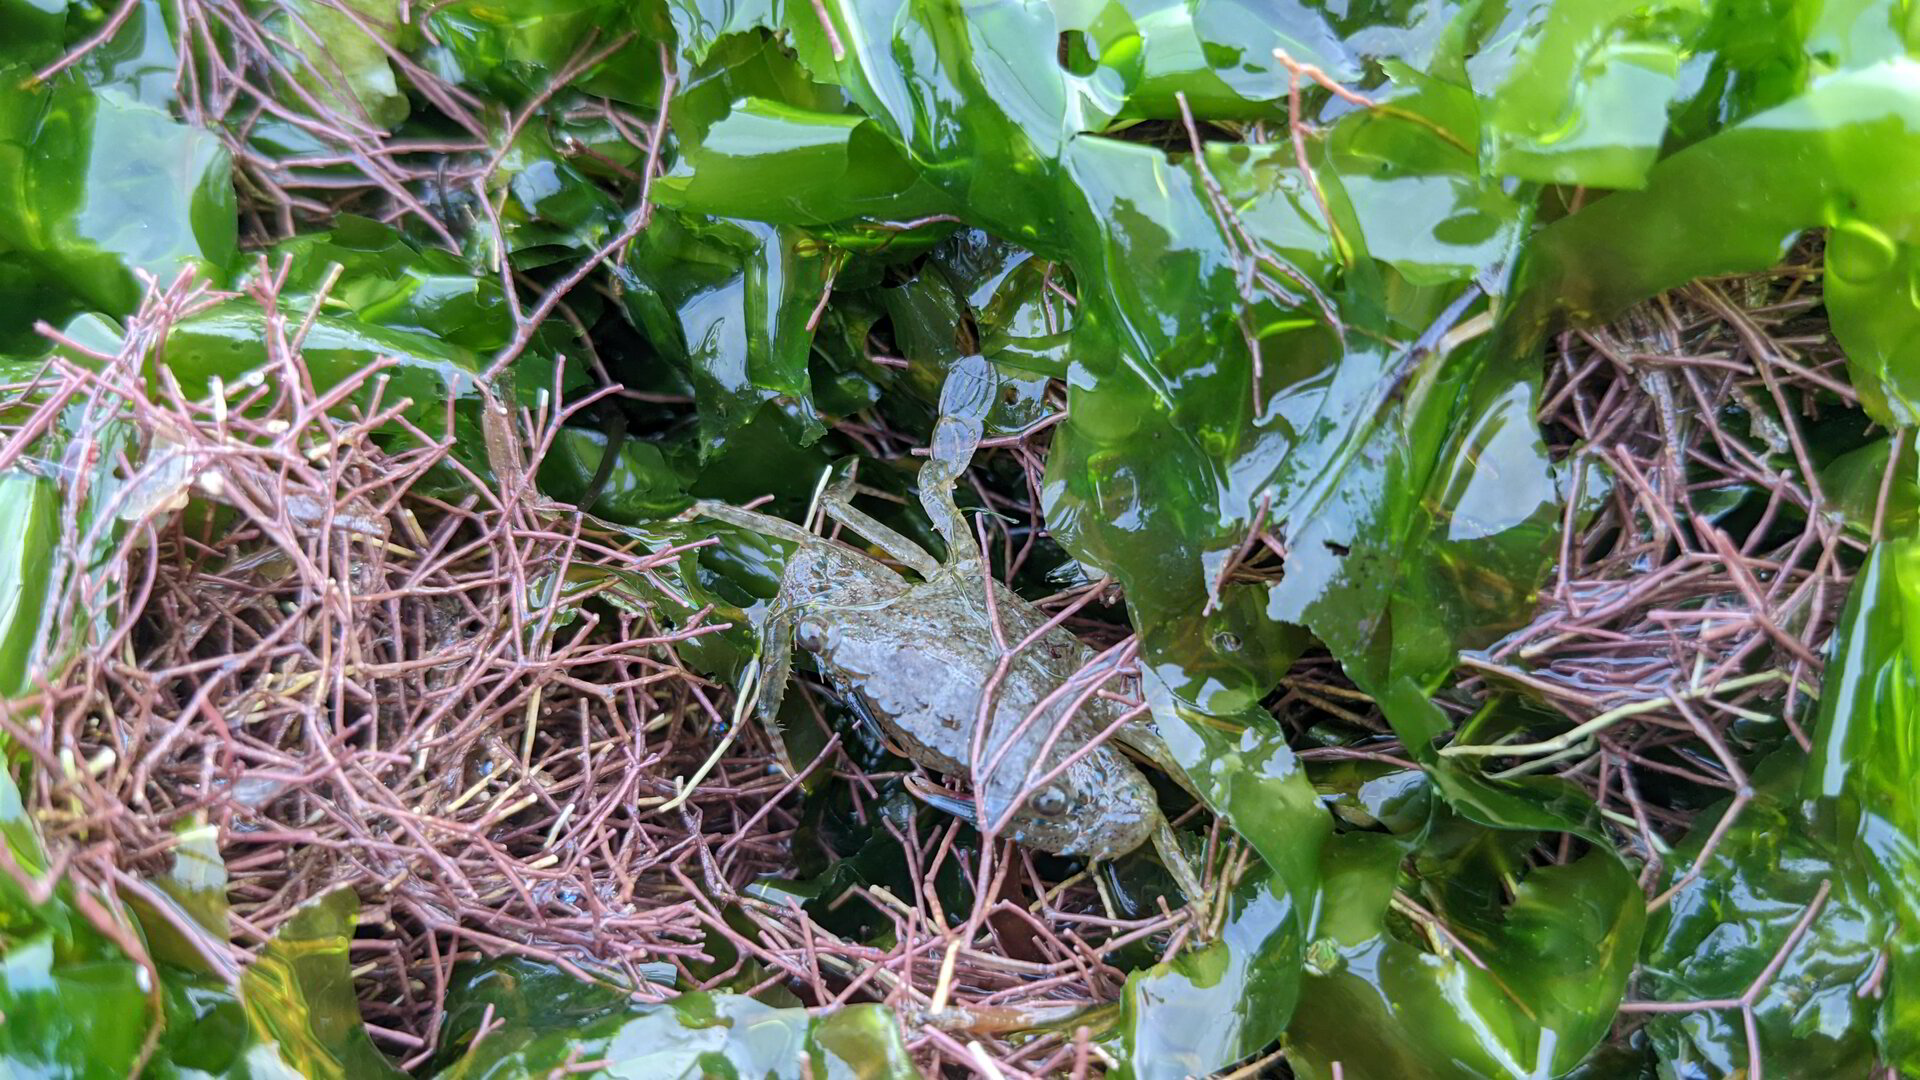 crab hidden in the grass